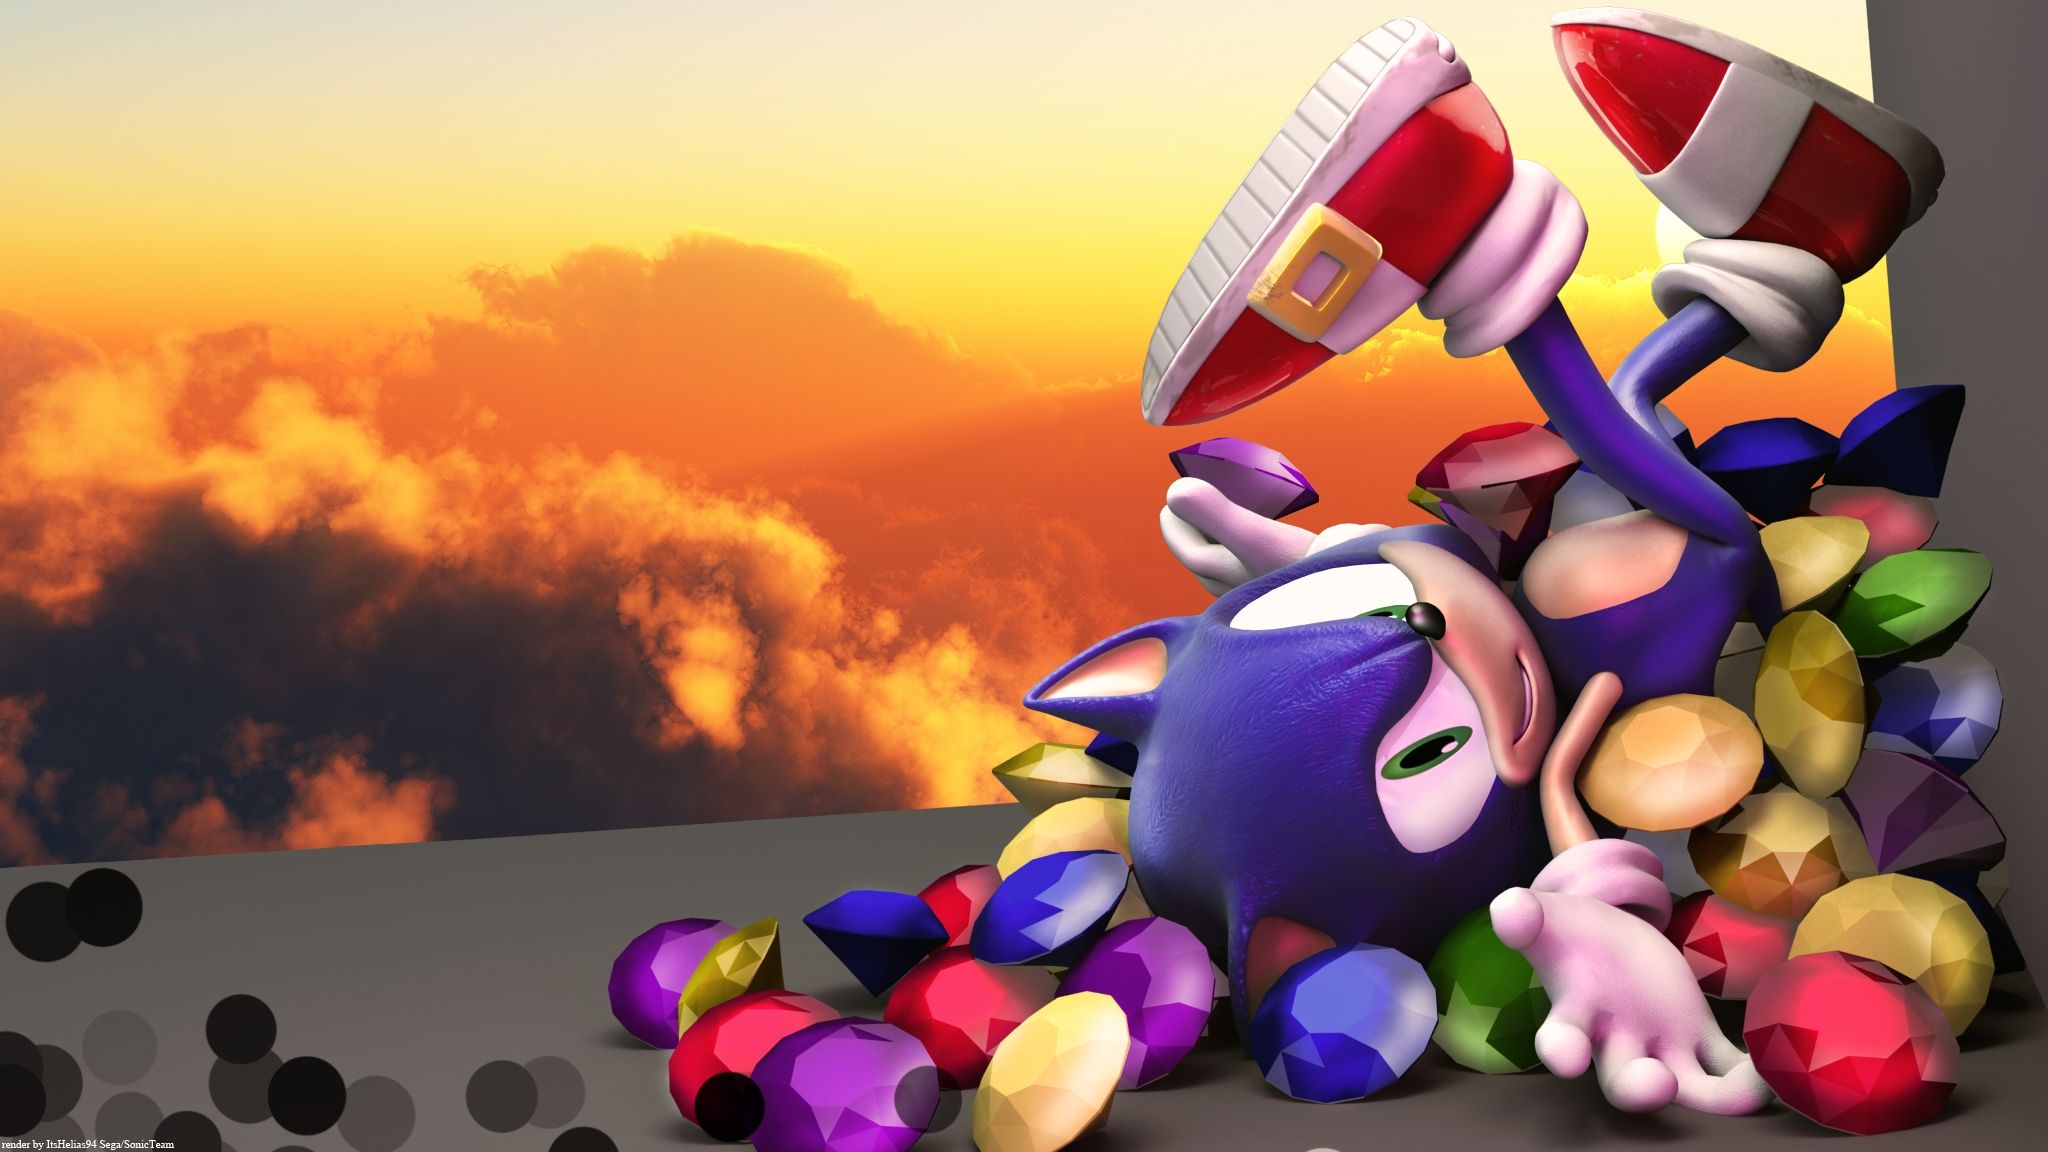 Sonic the Hedgehog (Character) Anime Image Board